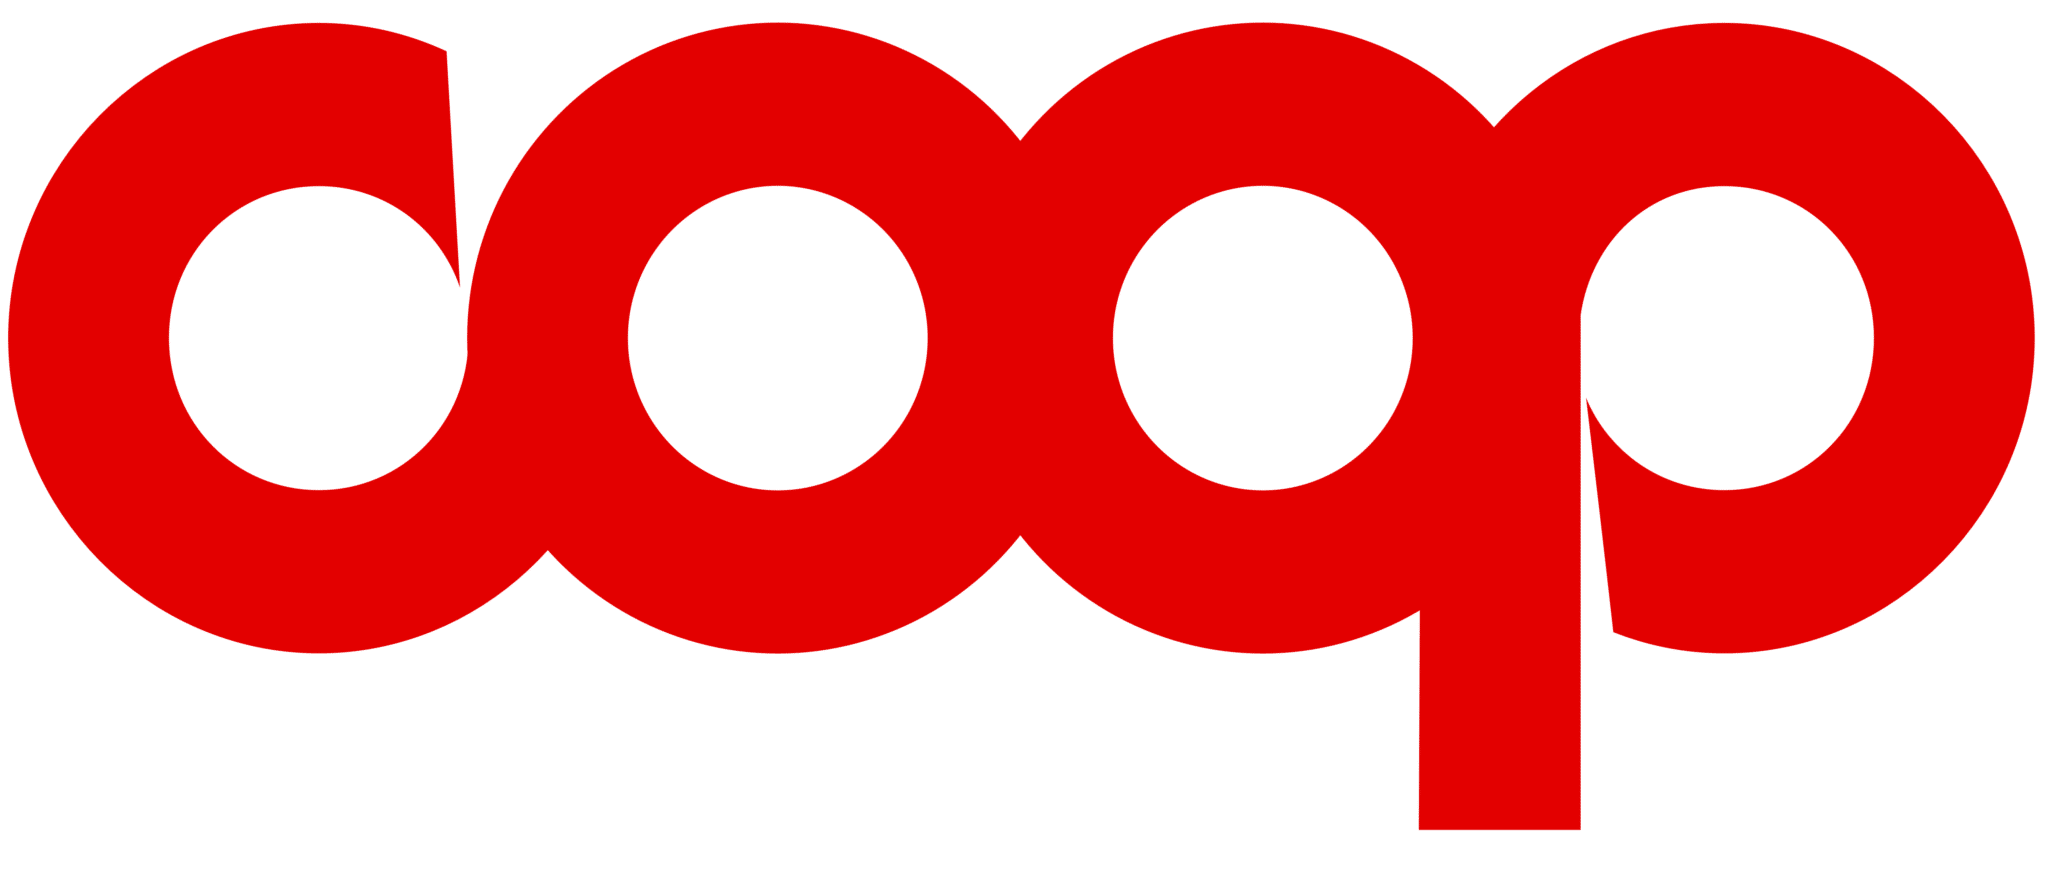 coop-logo.png